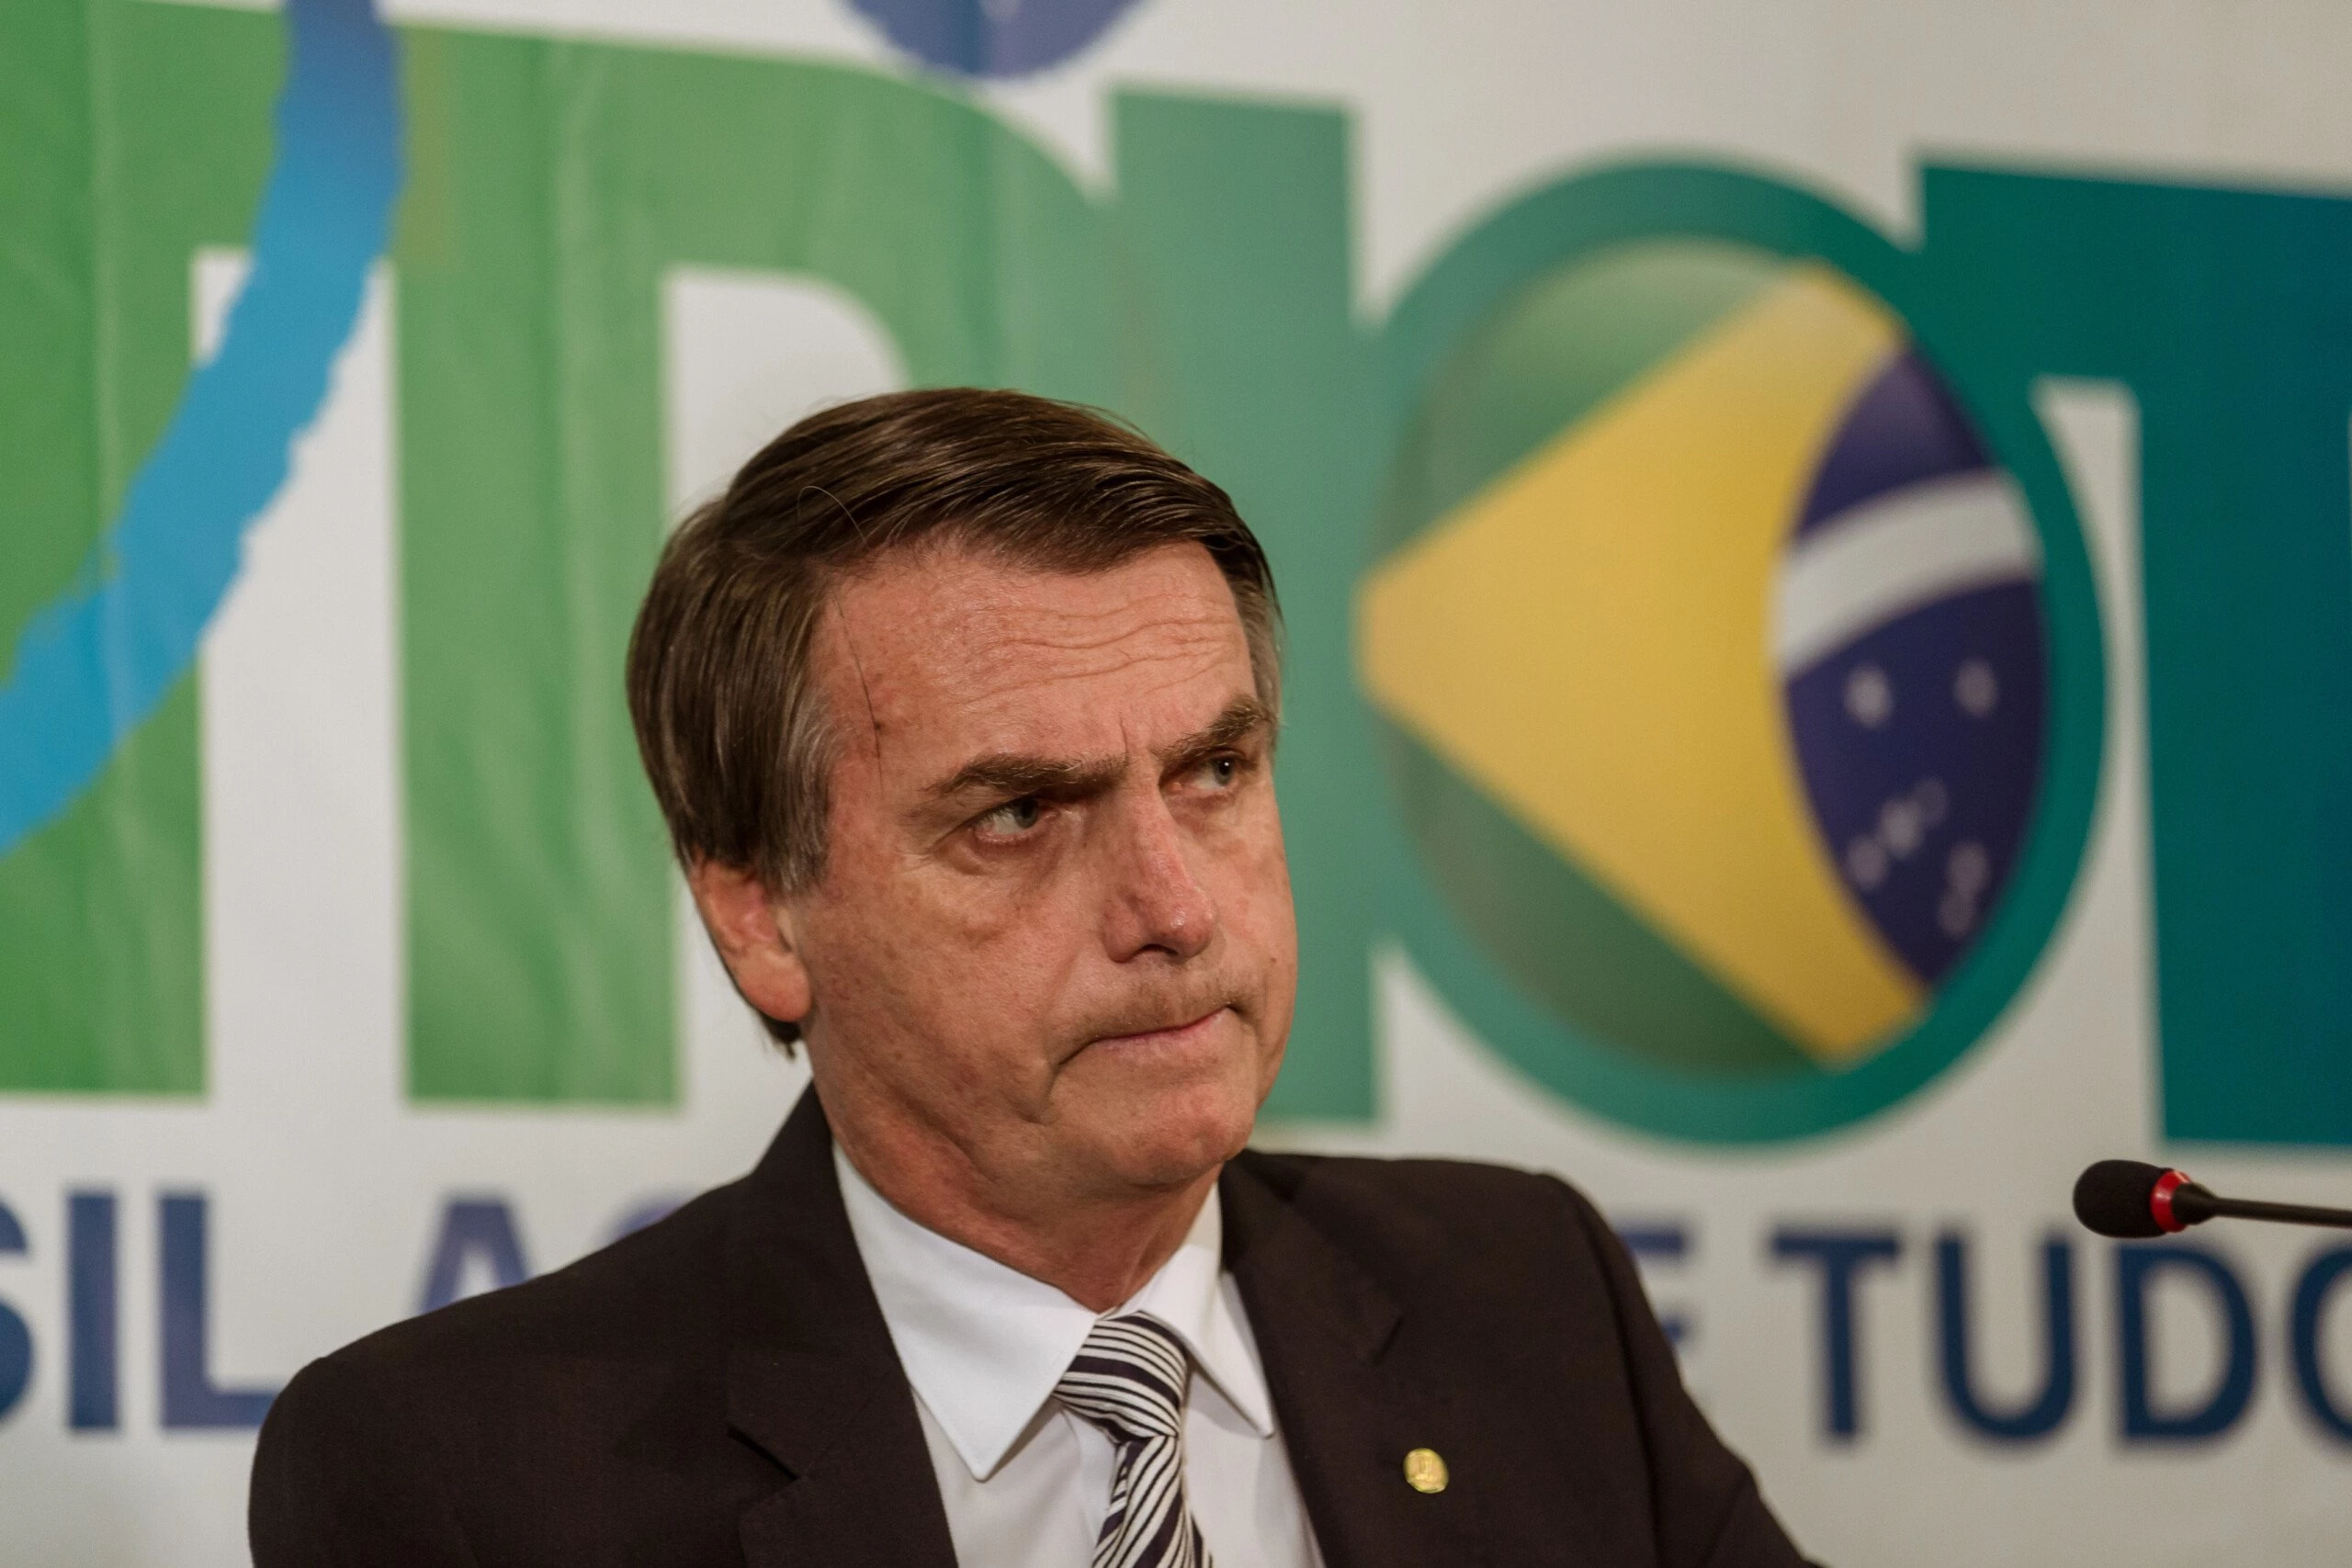 Anti-Mariana Godoy: após críticas de jornalista a Bolsonaro